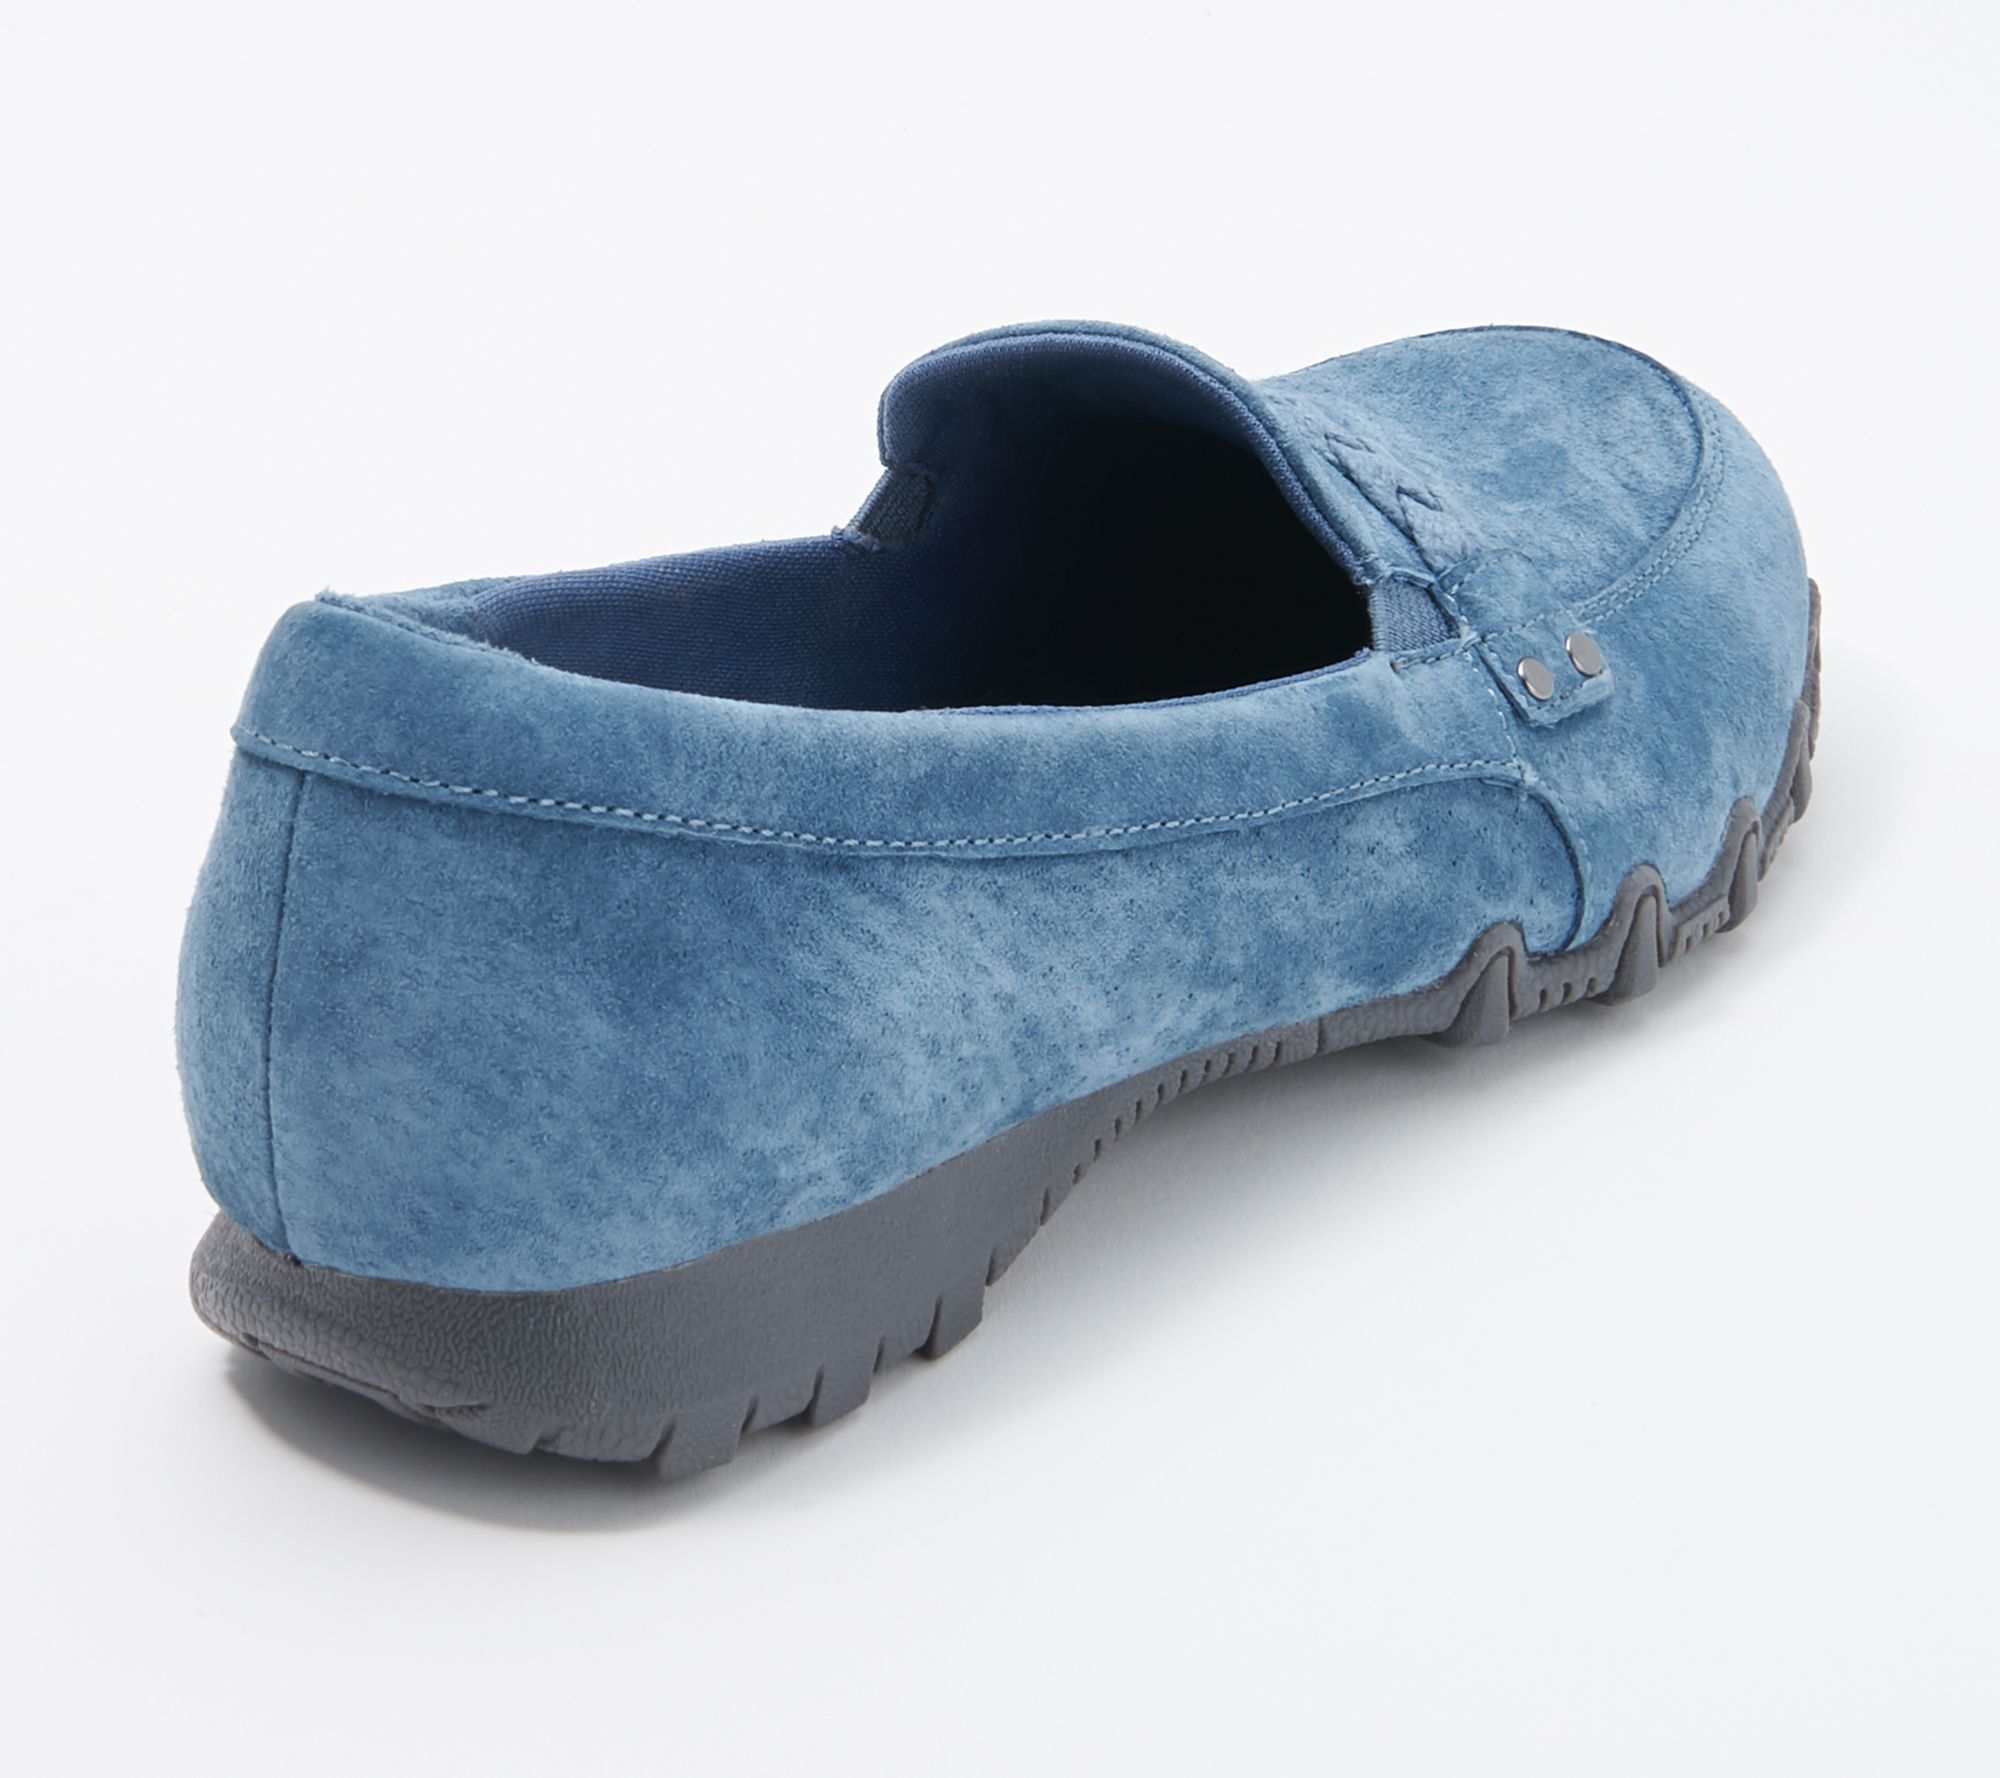 skechers blue suede shoes